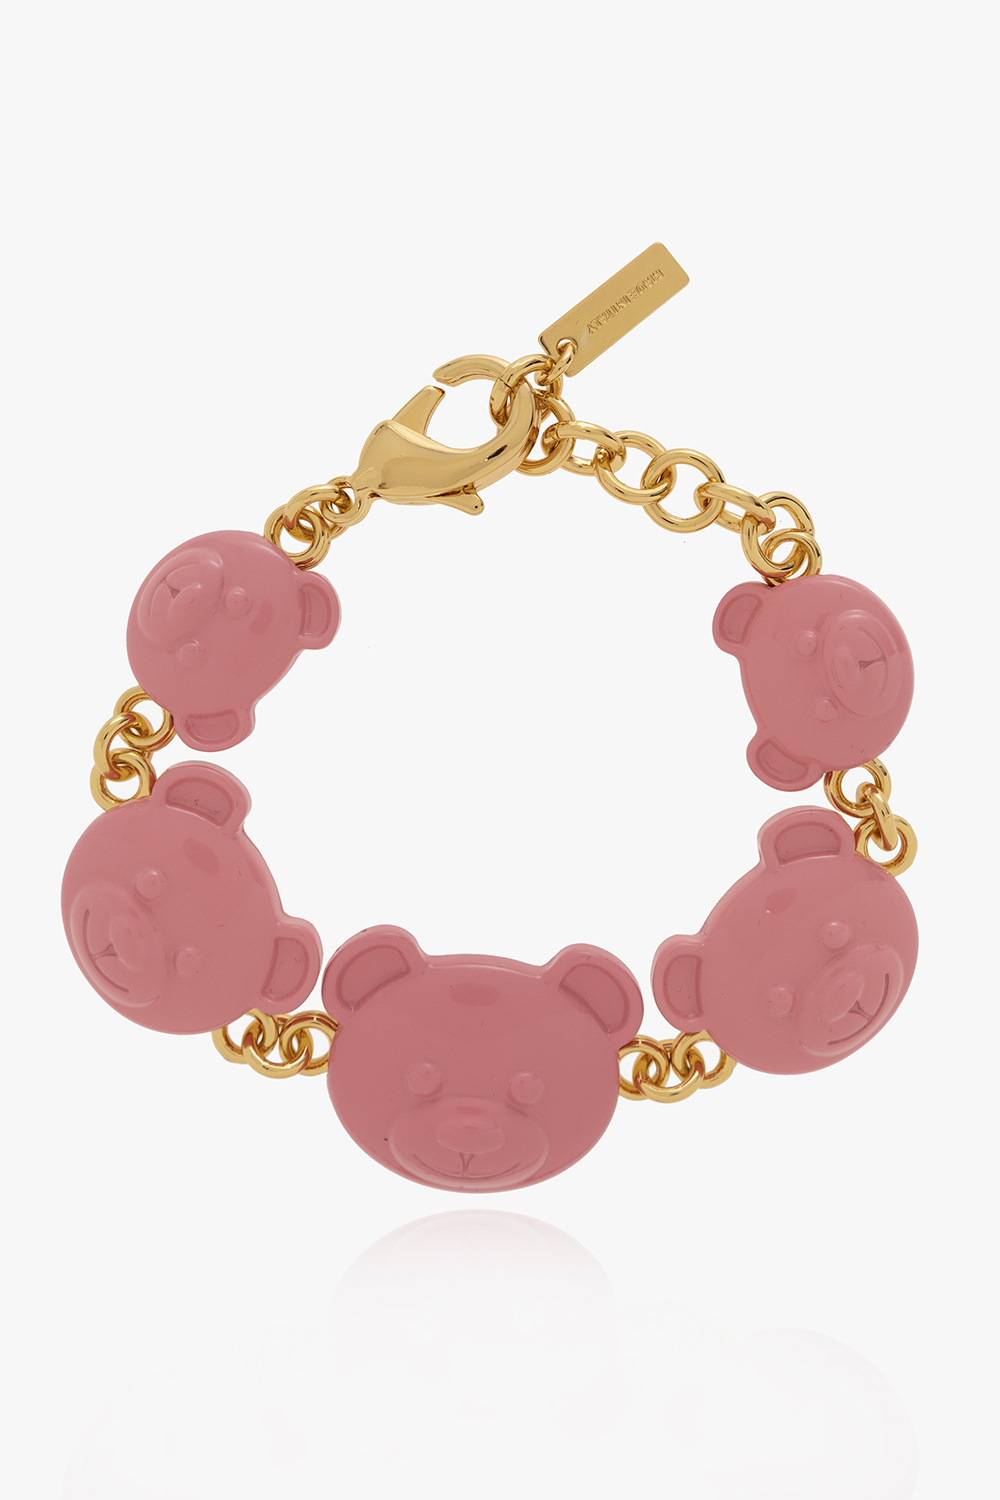 Stylish Charm Fashion Bracelet For Womens and Girls TeddyBear Chain Bracelet  Fancy Bangle Latest Collection Adjustable